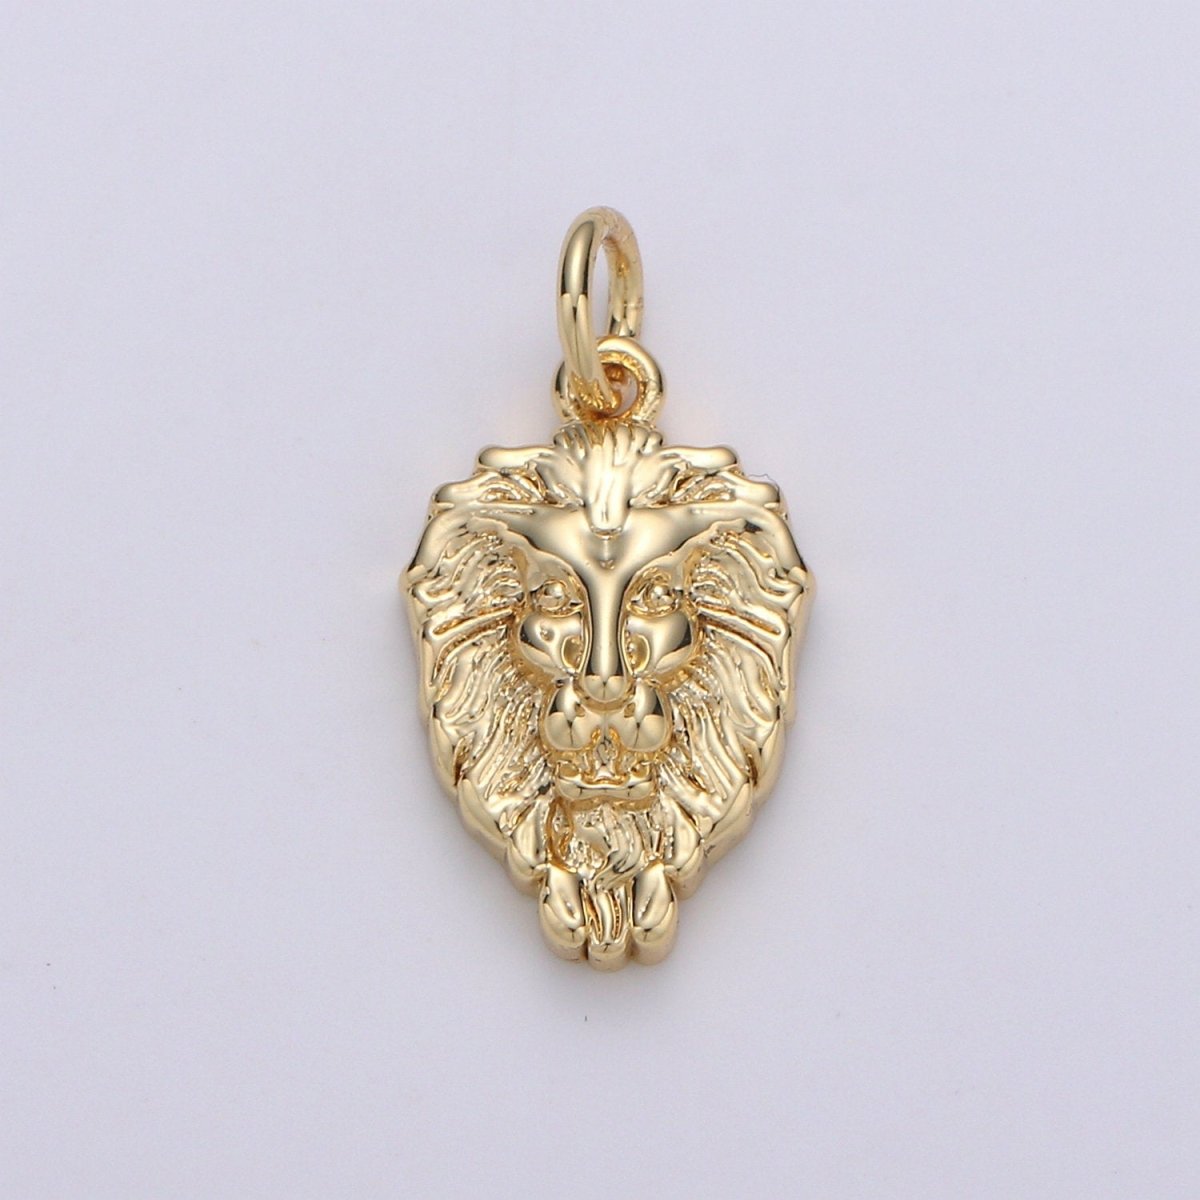 Dainty Lion Charm Gold Medallion, Silver Lion Pendant, Lion King Jewelry, Animal Necklace Charm for Bracelet Earring Necklace Component D-130 D-131 - DLUXCA